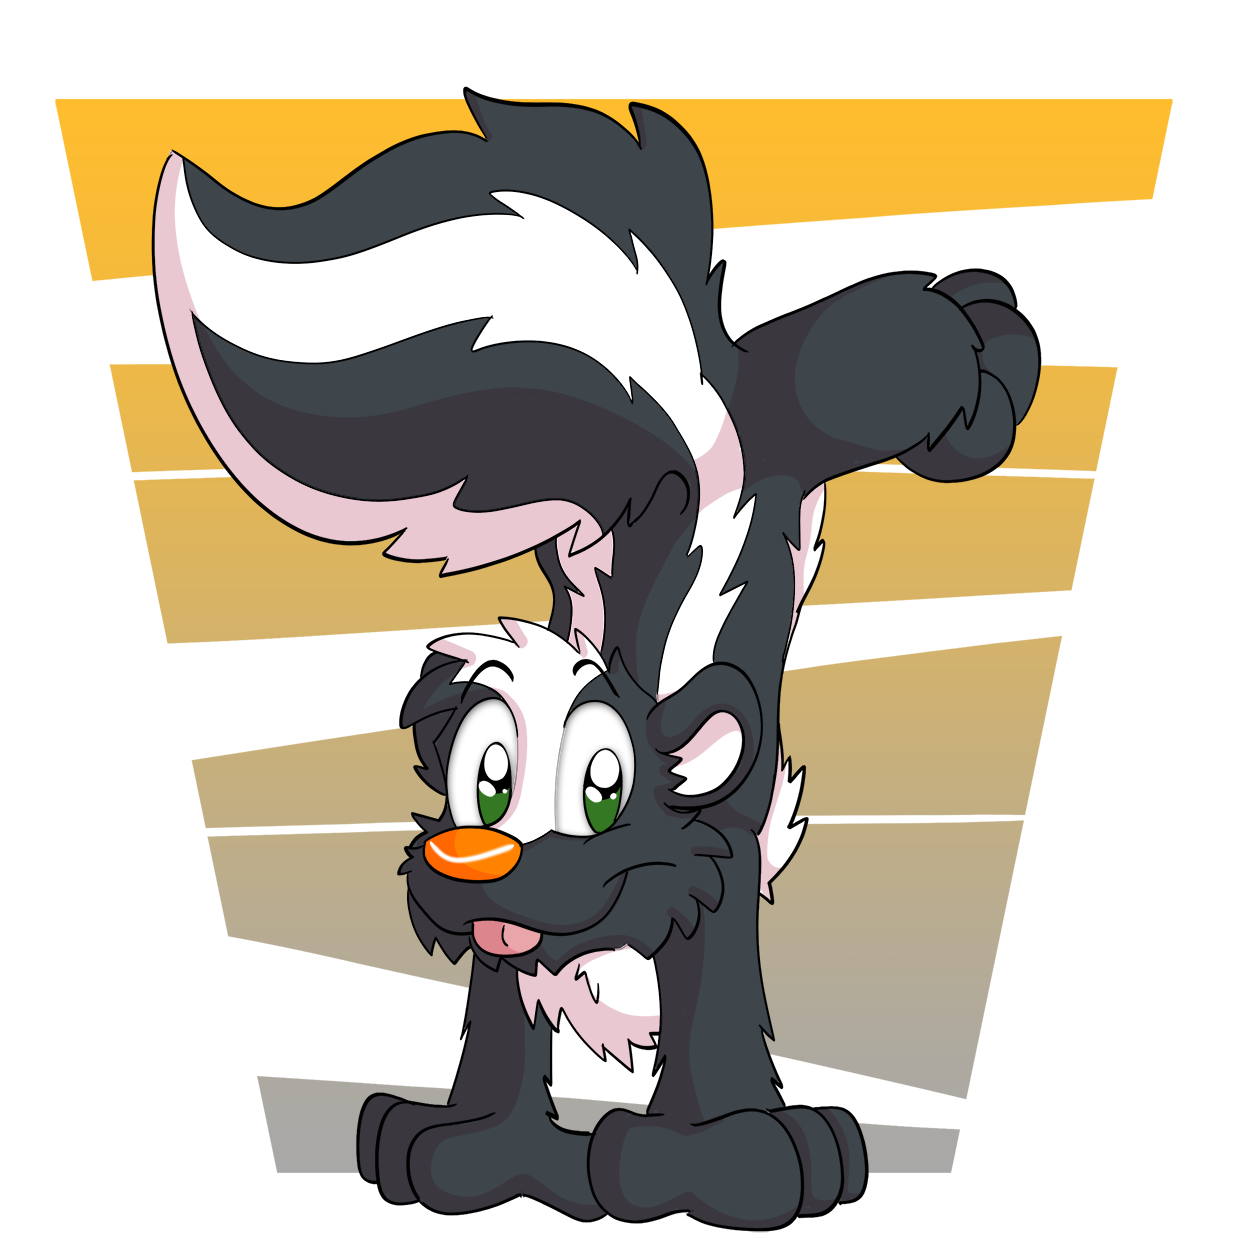 skunk spraying handstand